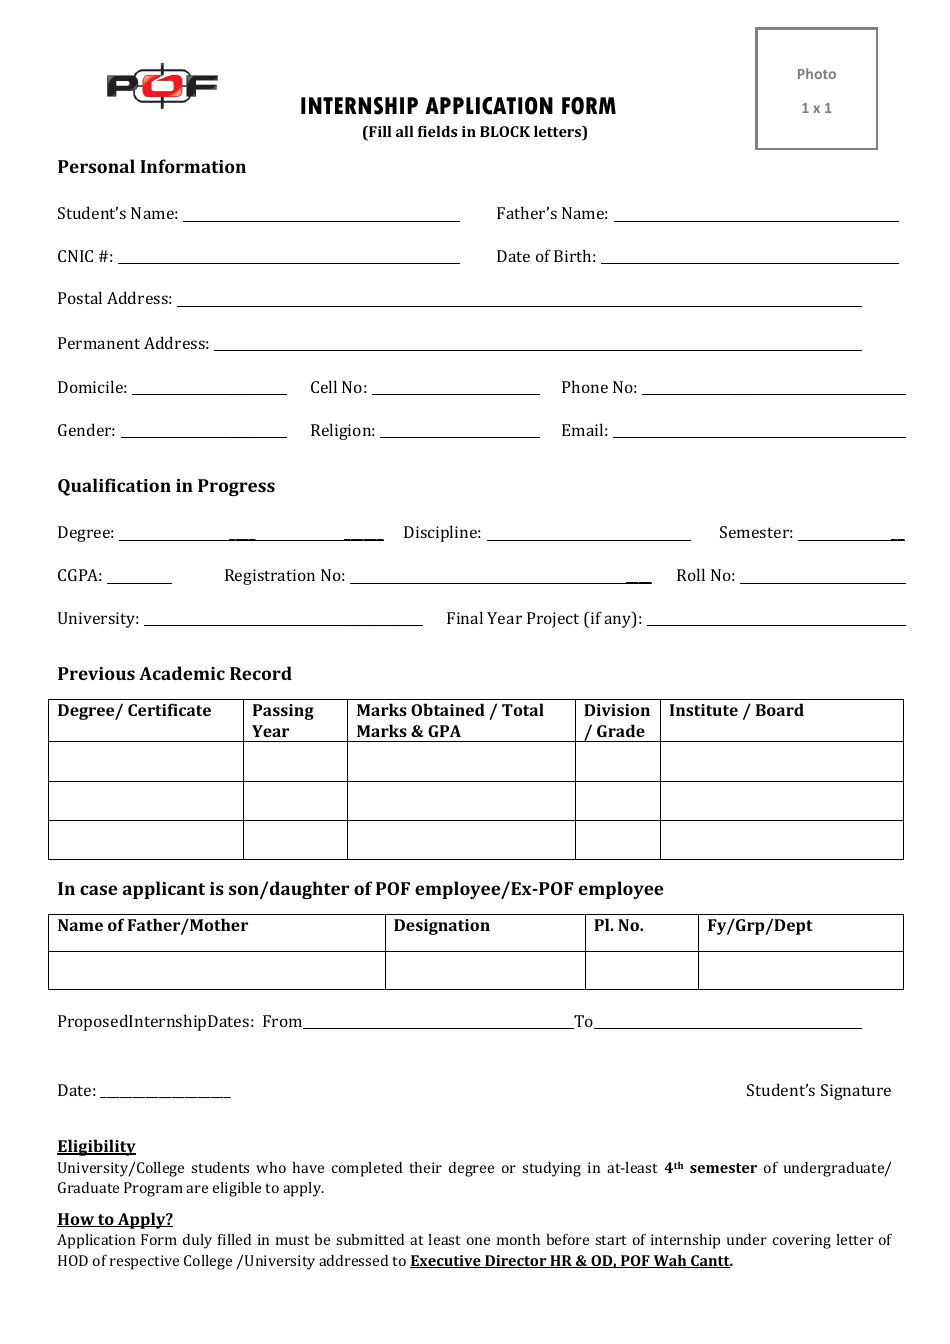 Internship Application Form - Pakistan, Page 1